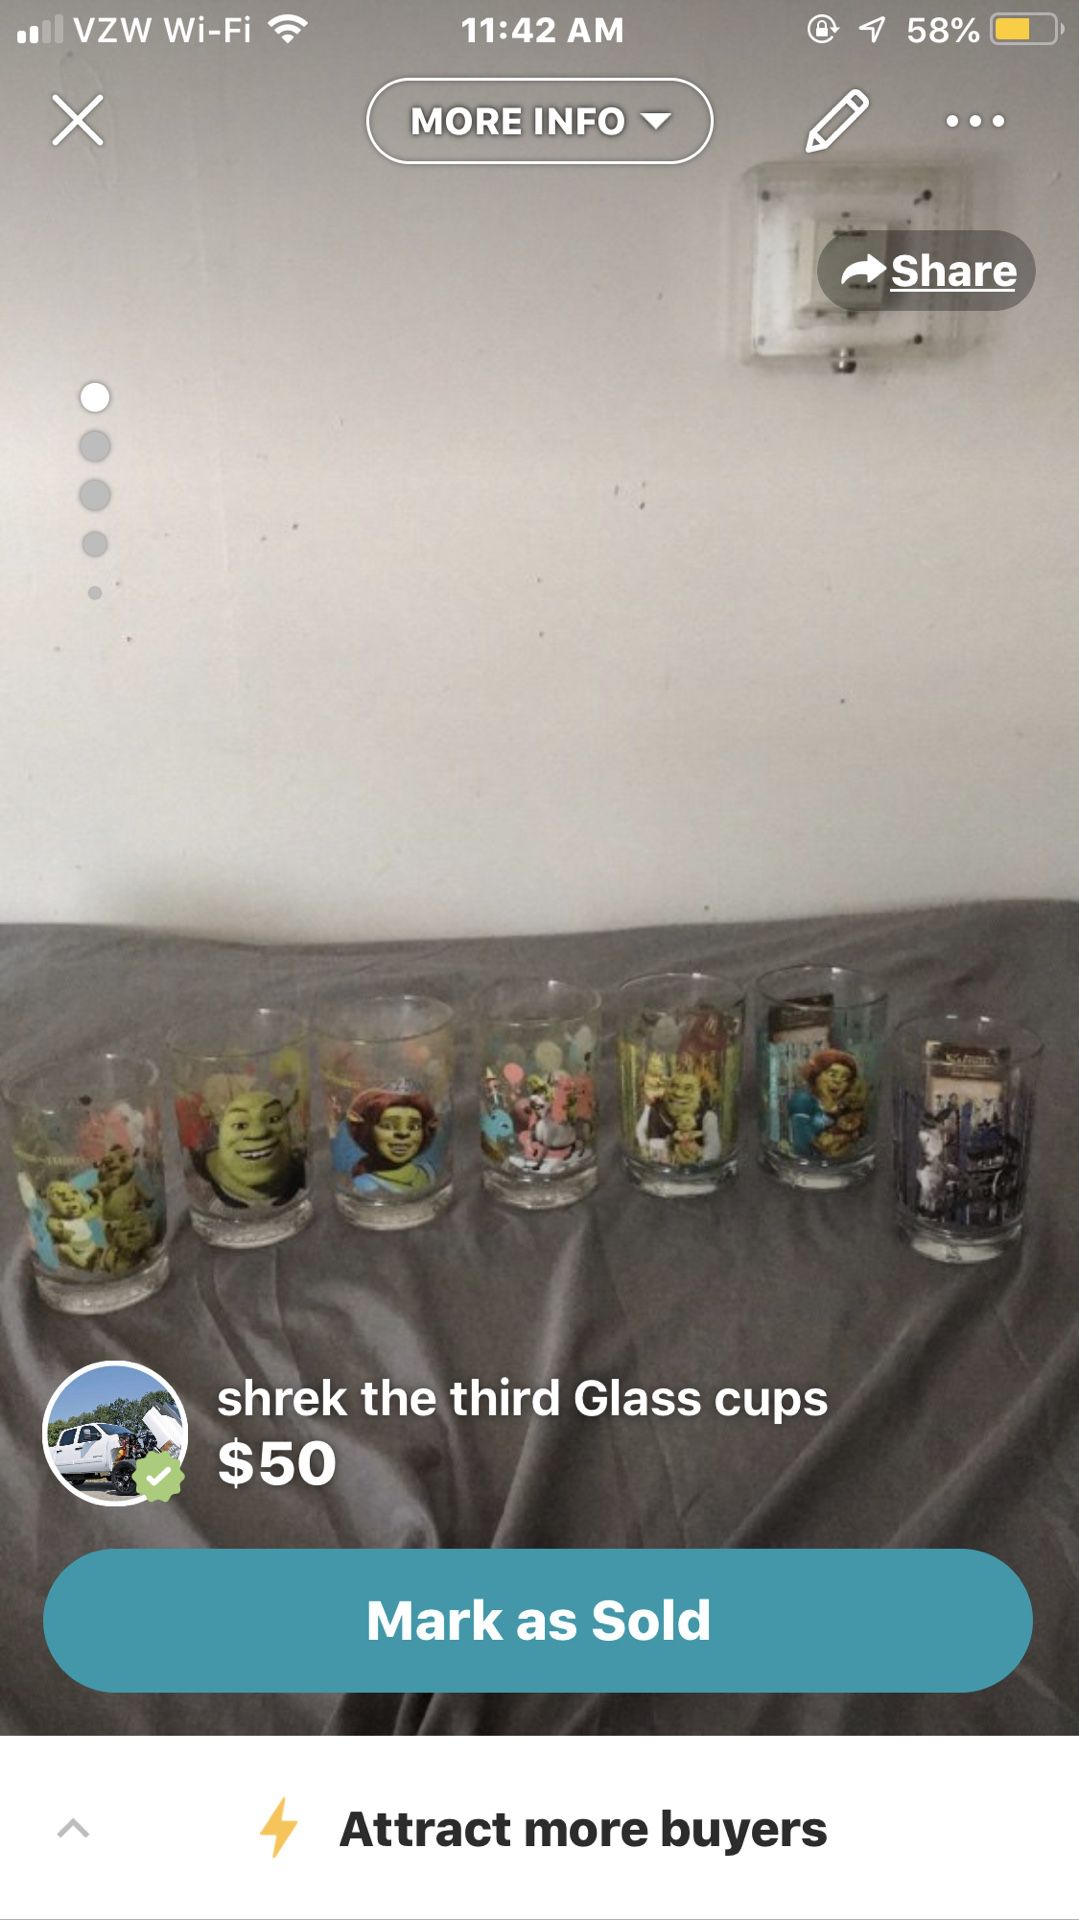 Shriek the third glass cups